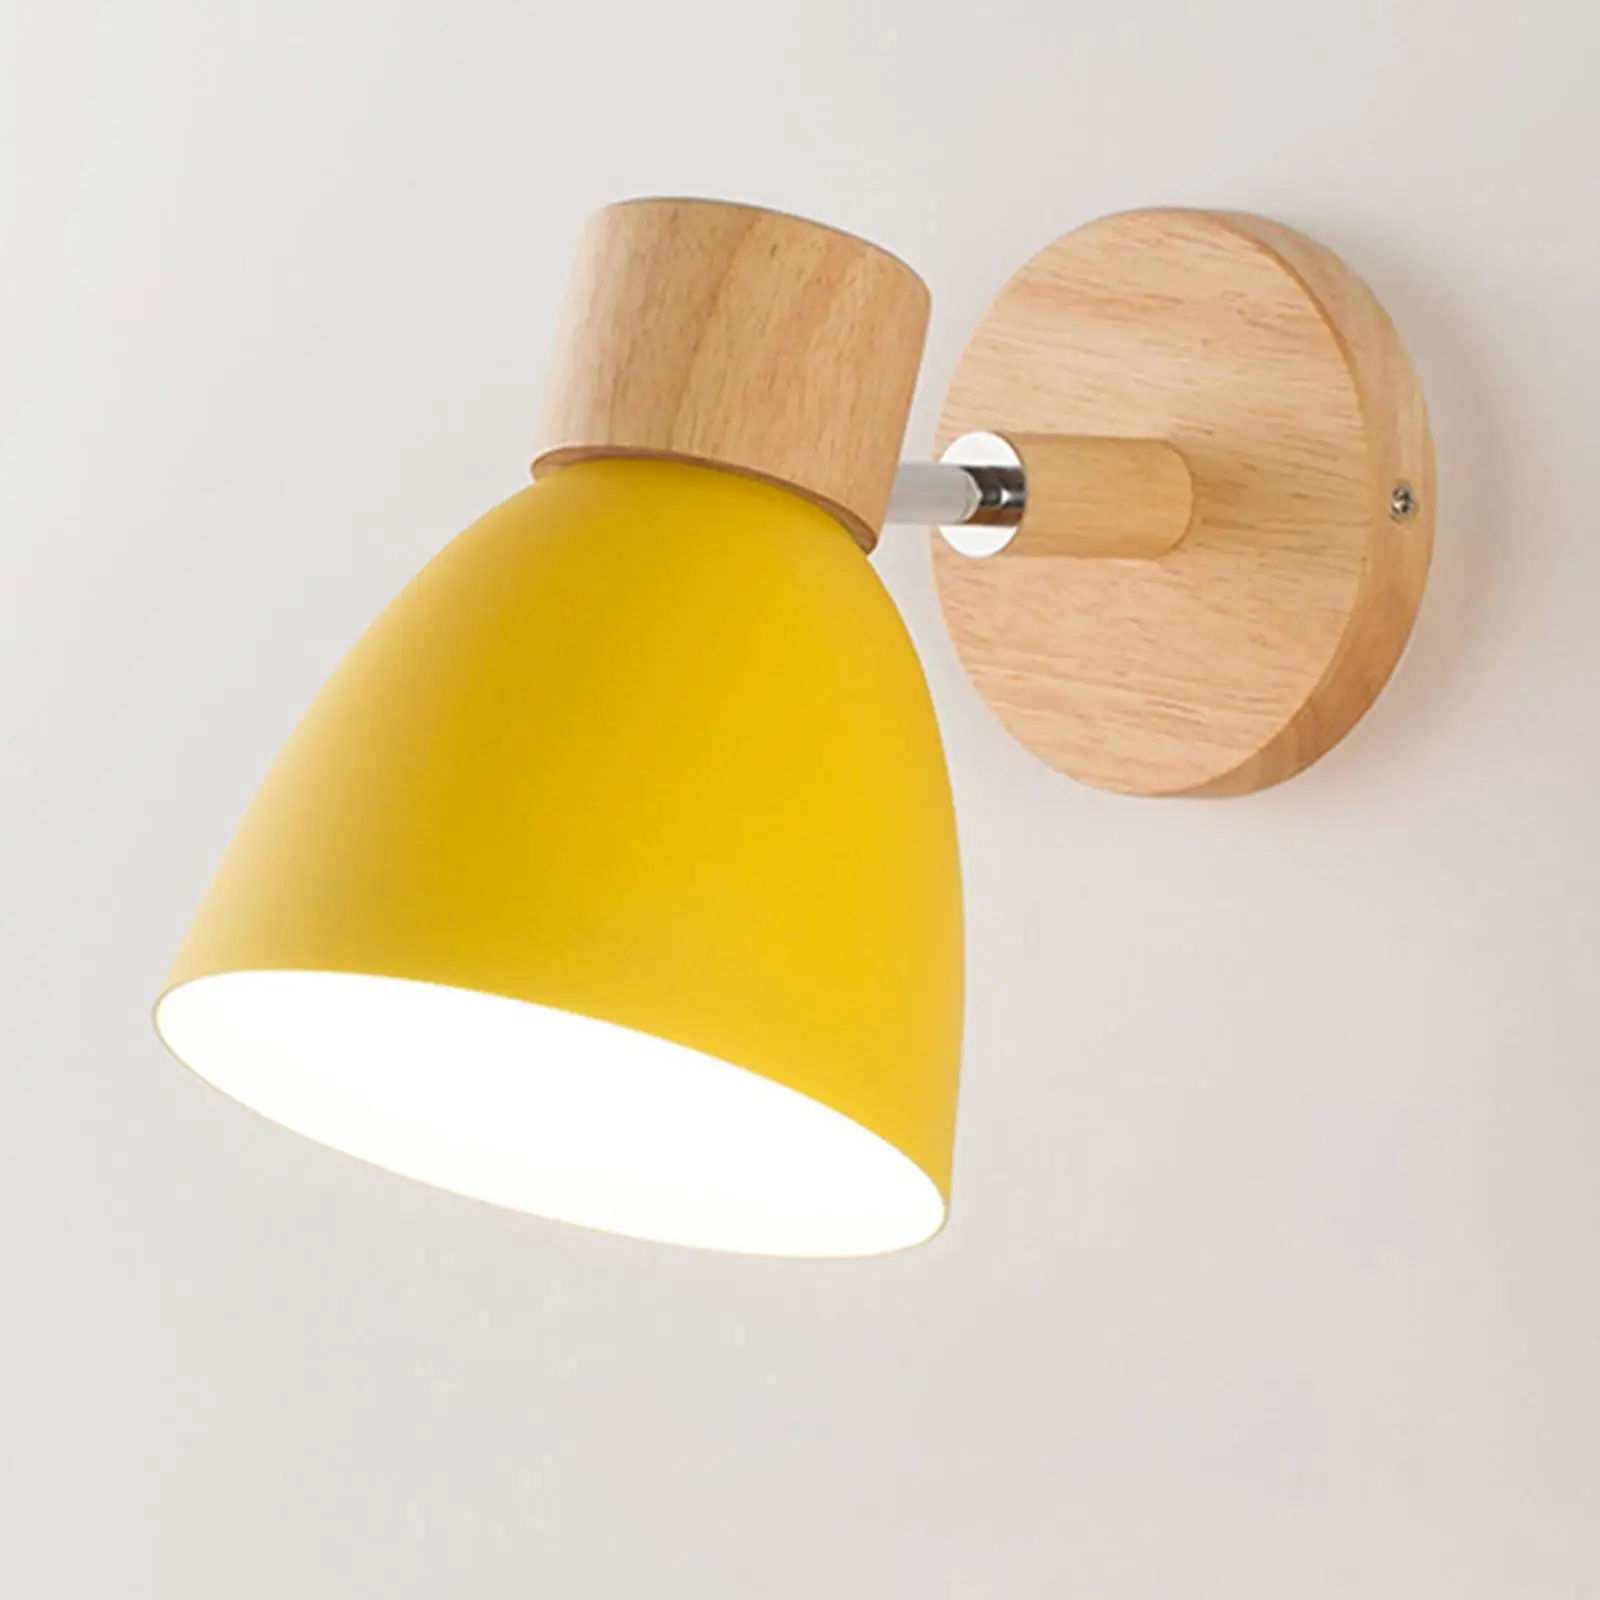 Modern Minimalist Wall Lamp Bedside Lamp Wood Wall Light Fixtures for Aisle